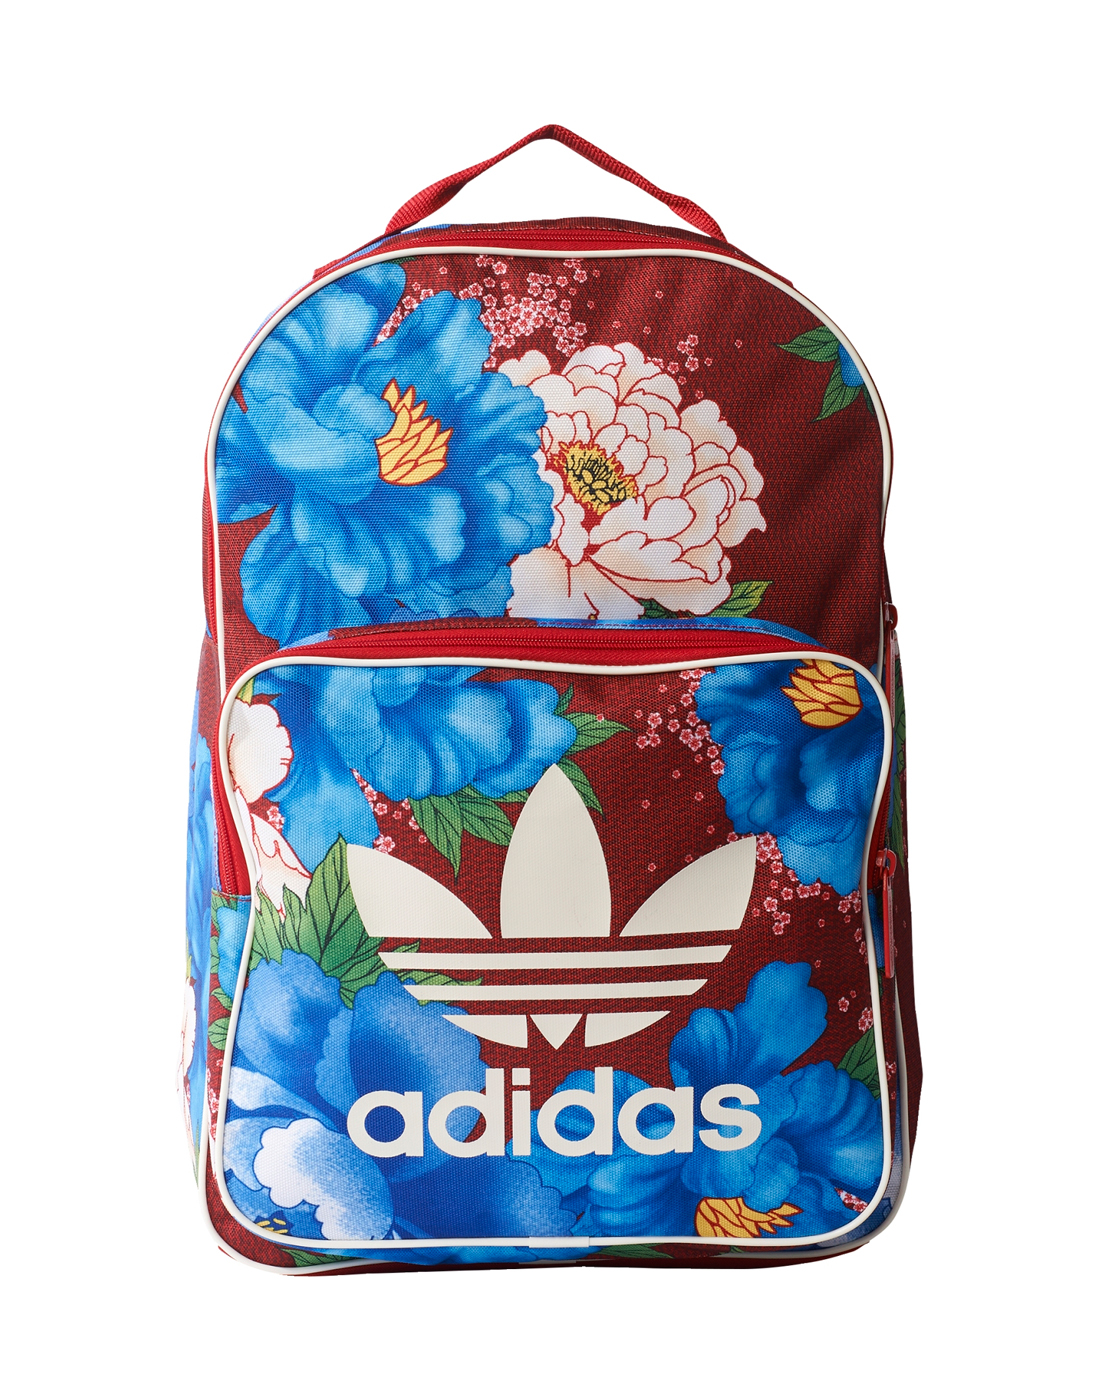 adidas backpack flowers